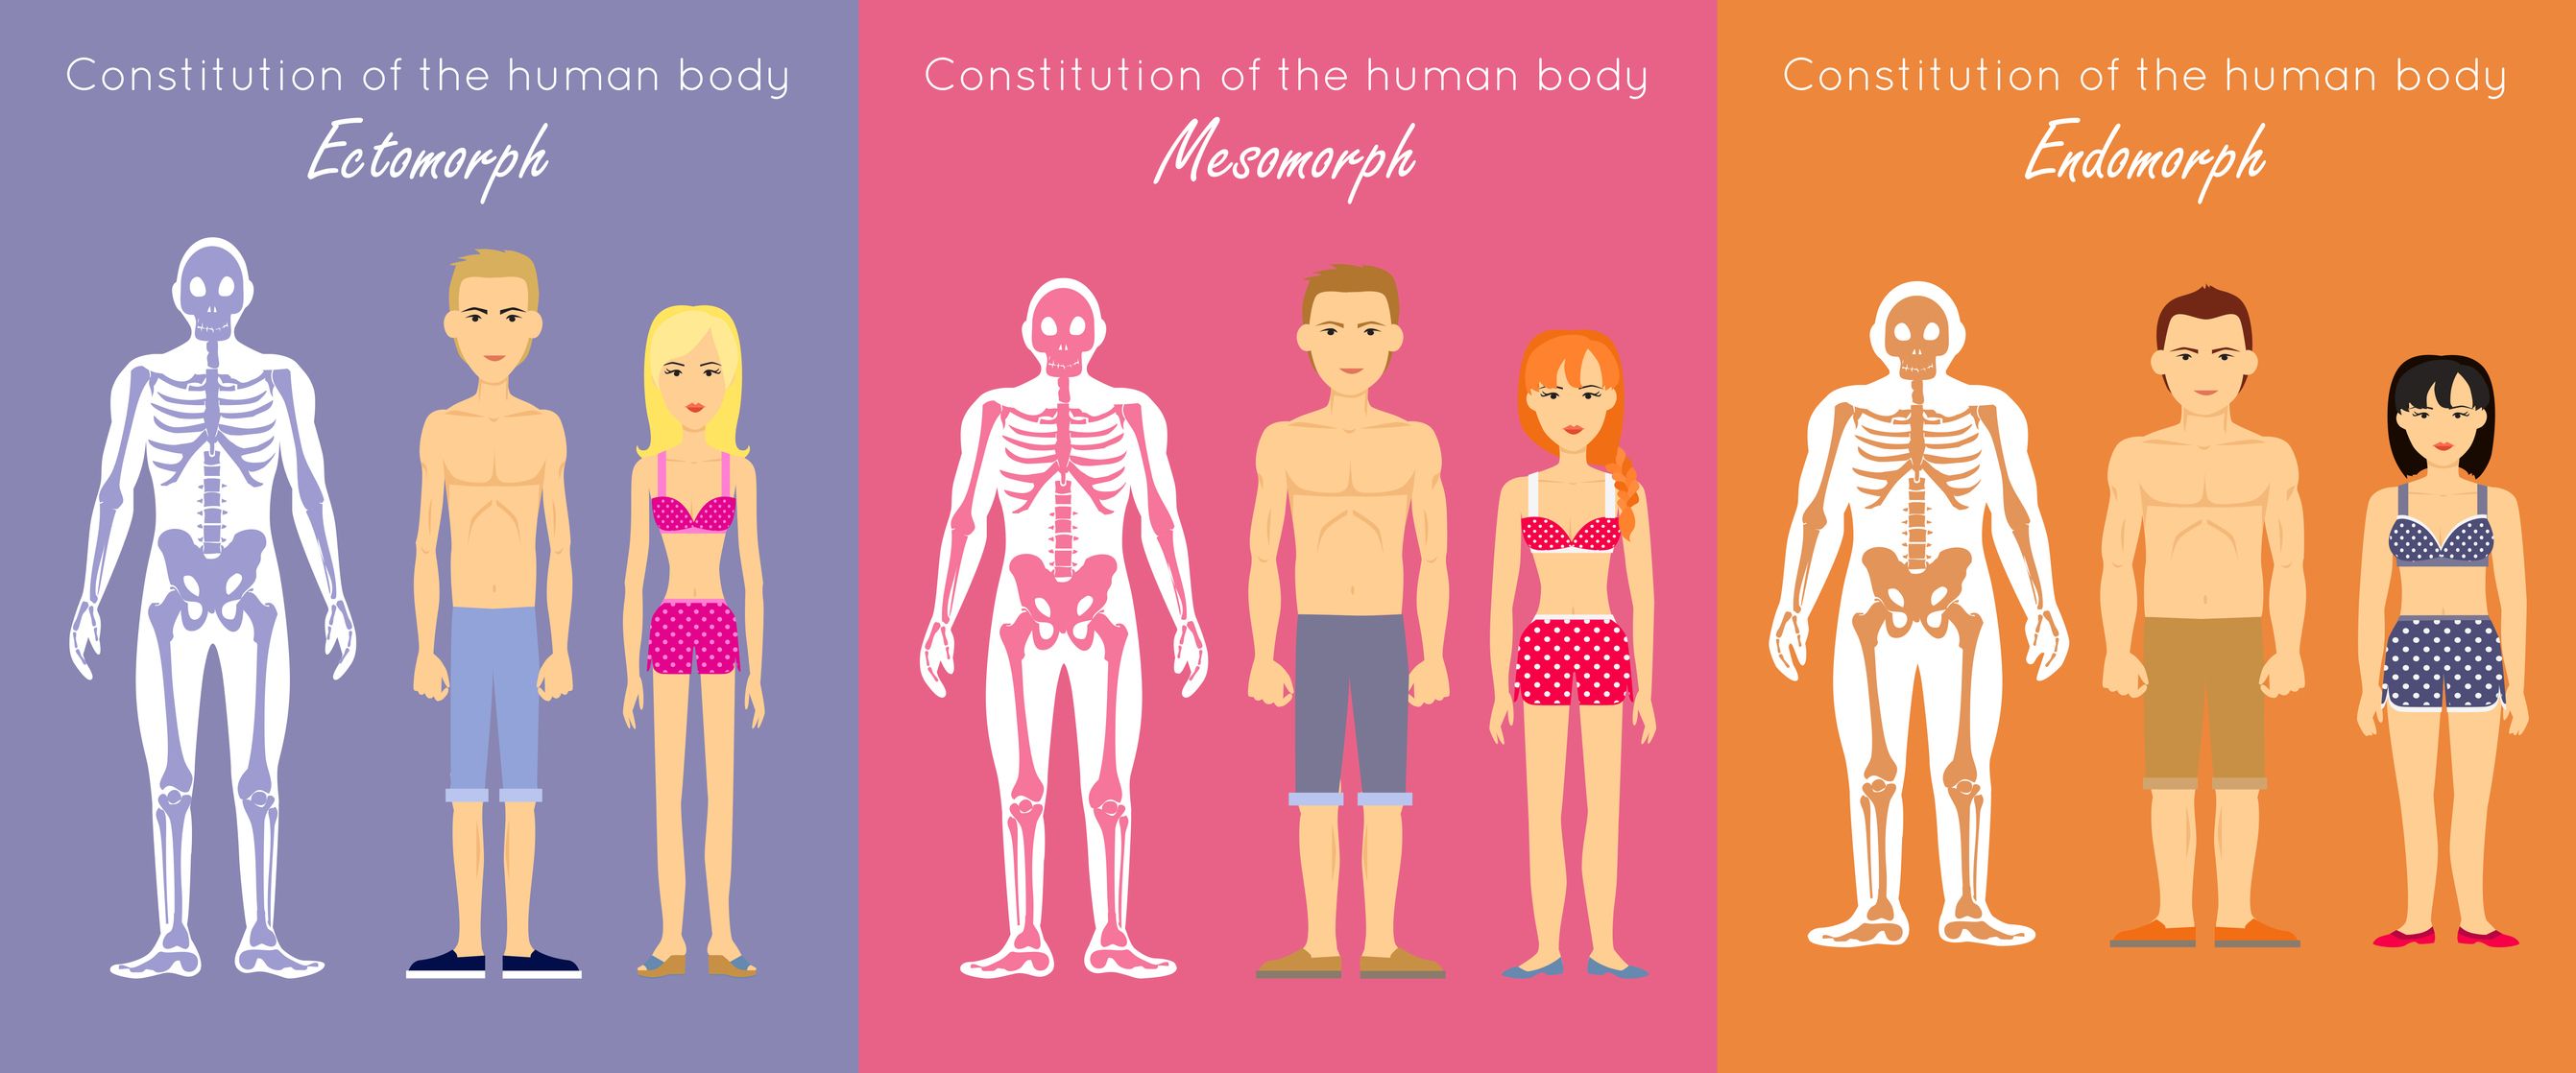 Body Type: 3 Body Types Defined. Endomorph, Ectomorph, and